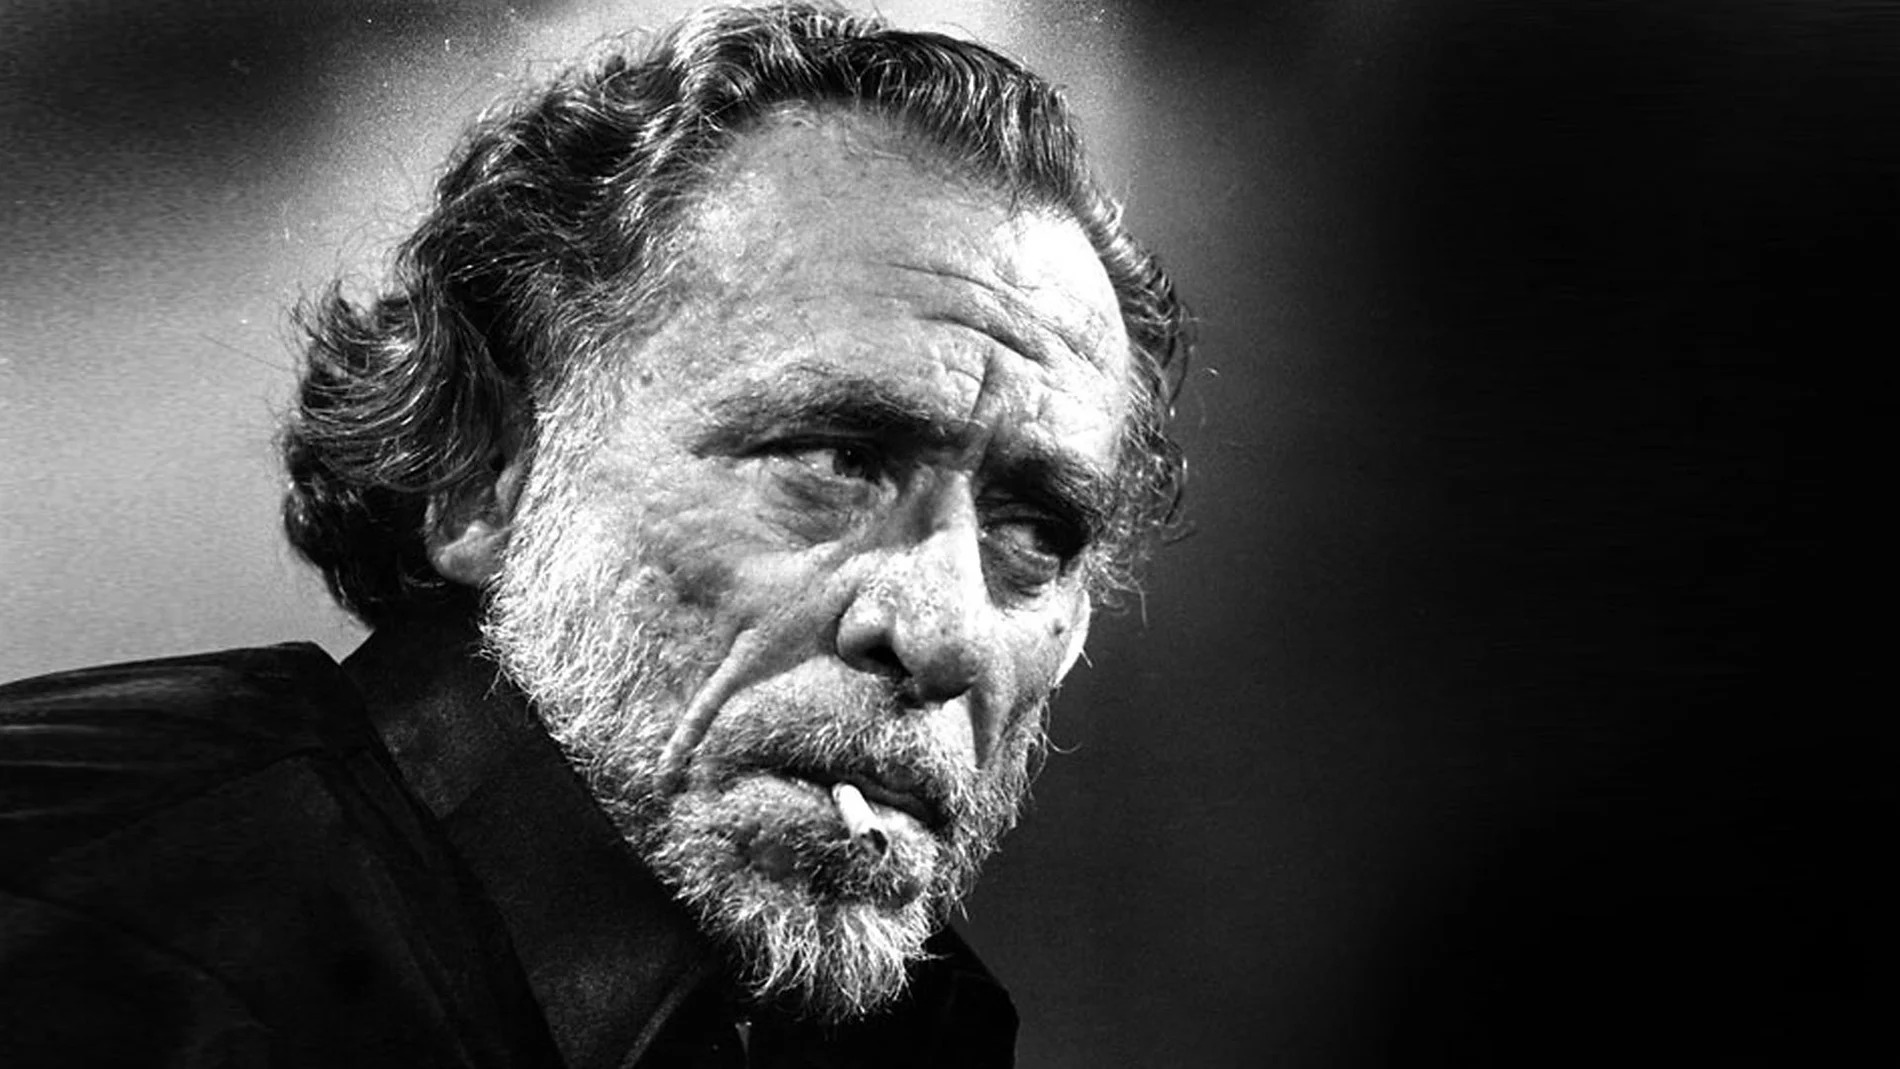 Charles Bukowski fuma en el programa 'Apostrophes', dirigido por Bernard Pivot en el canal francés Antenne 2